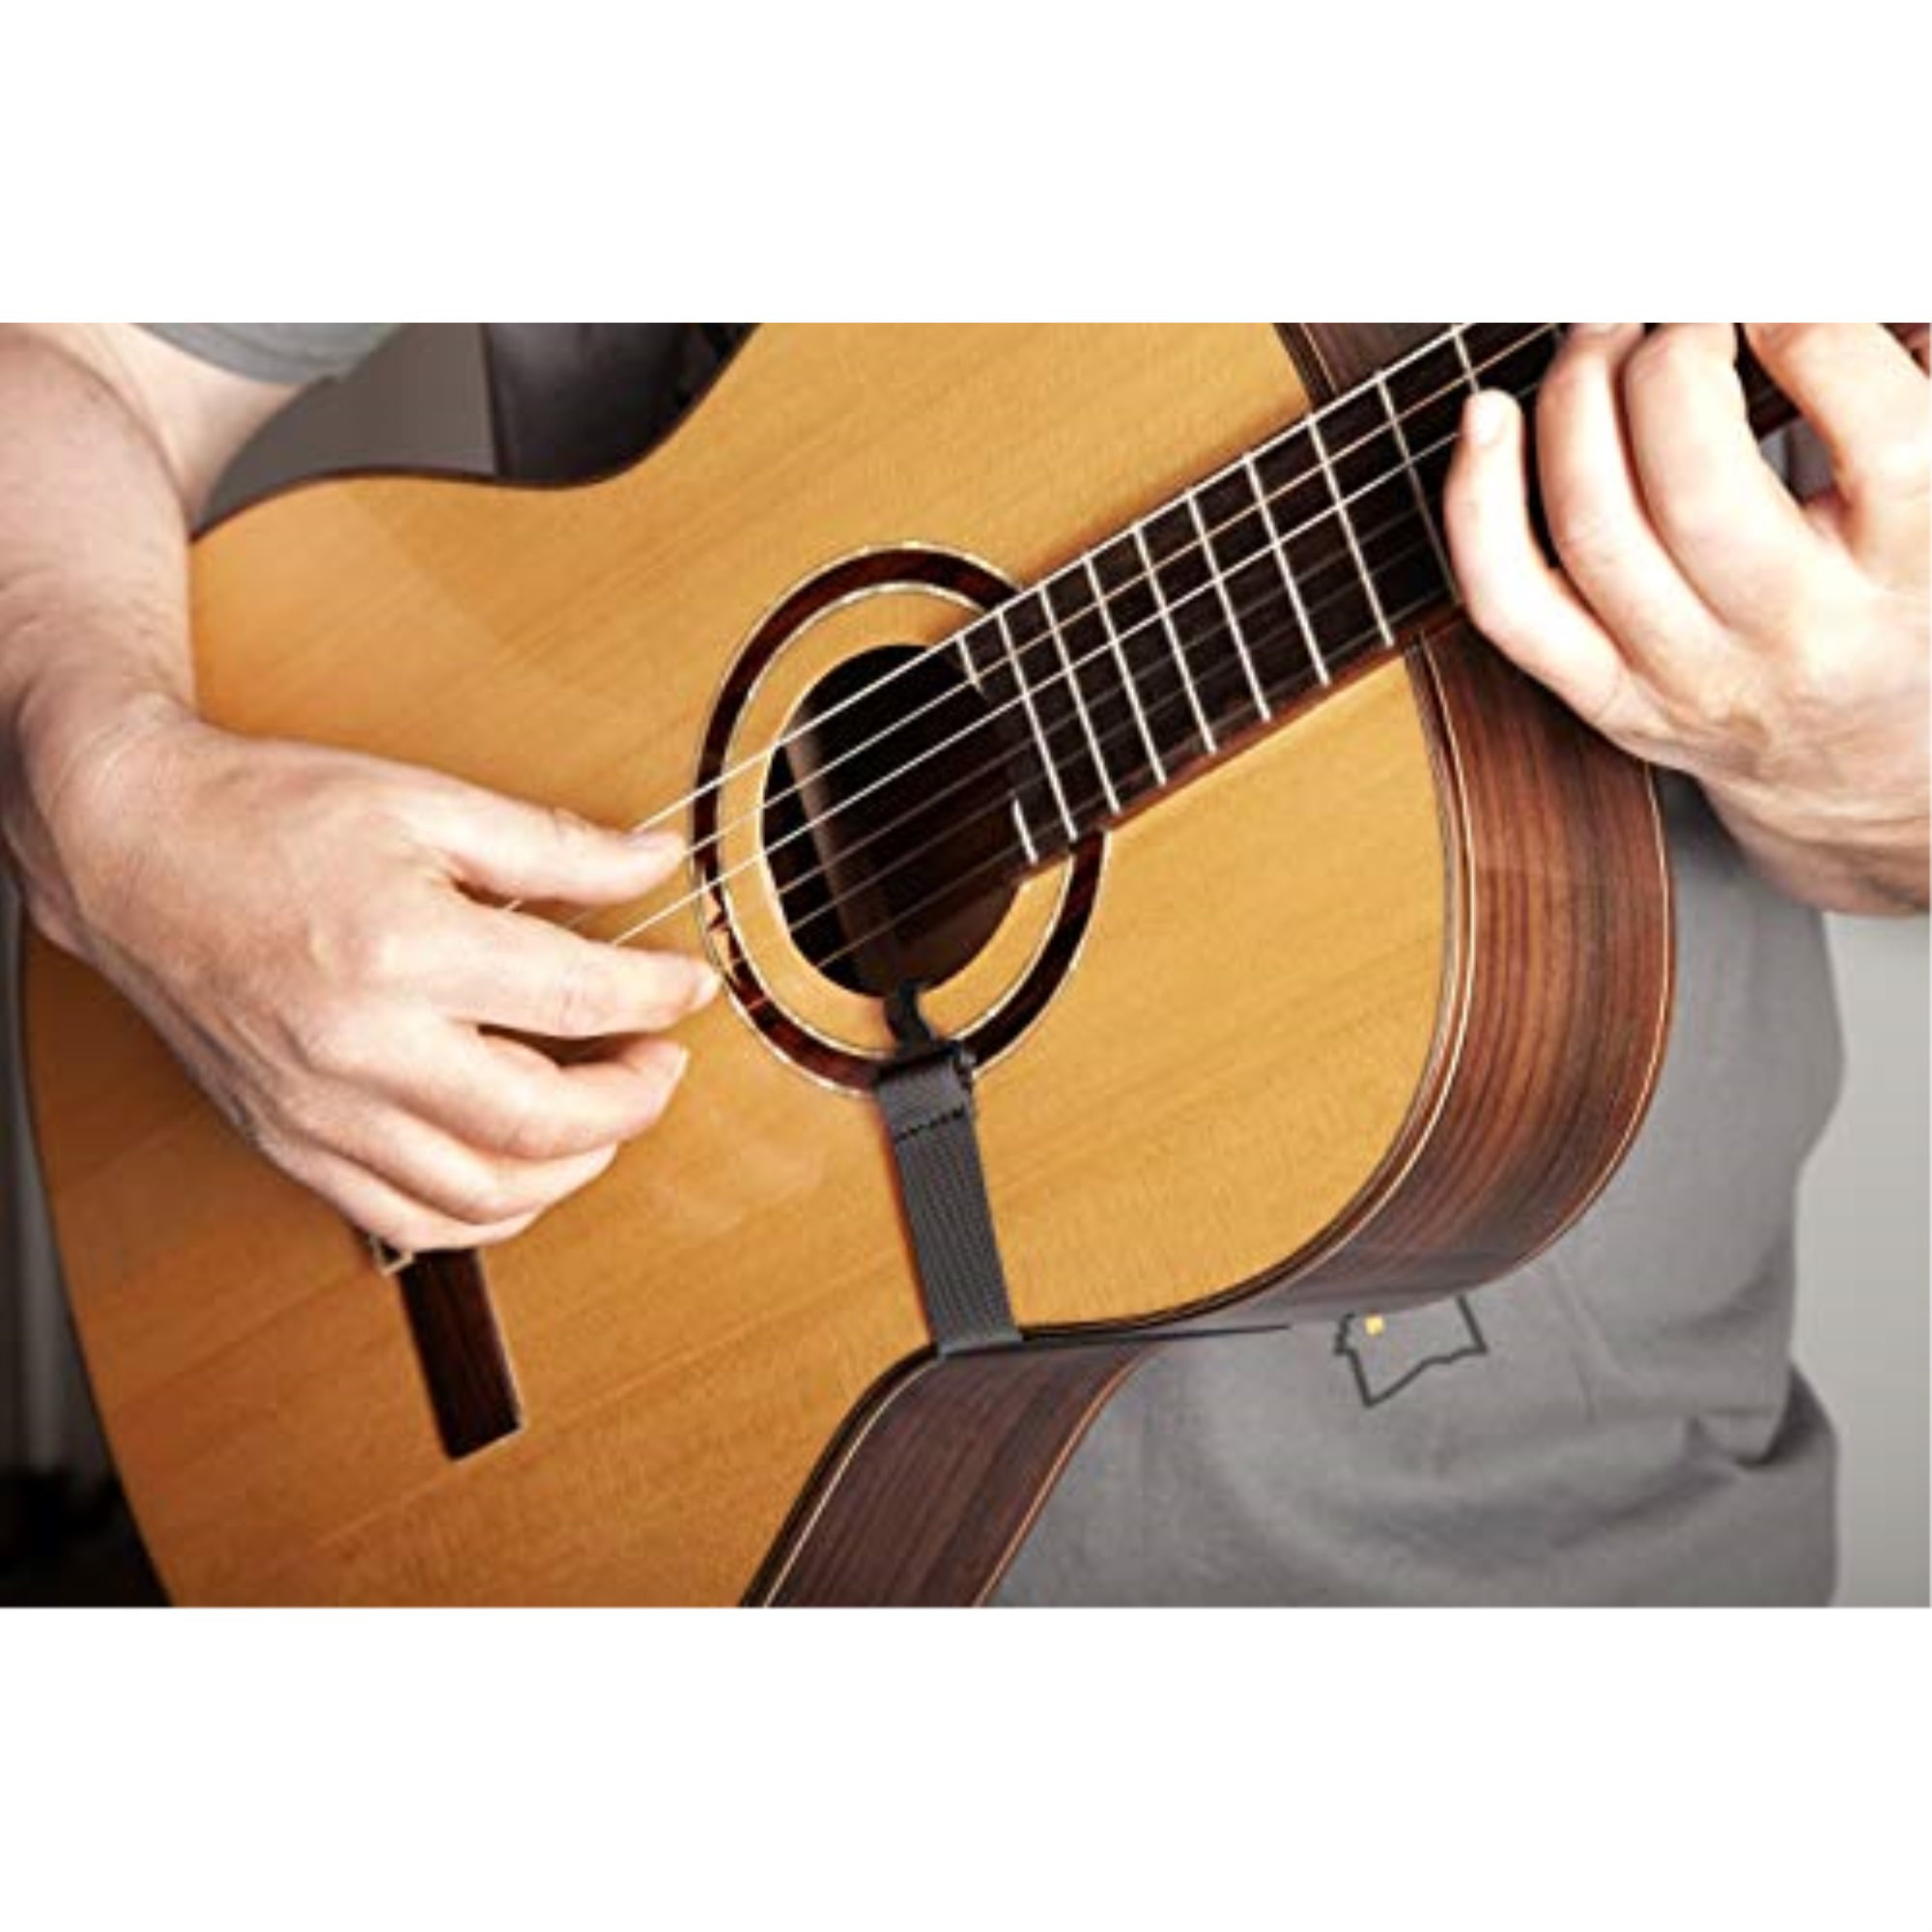 6X Nylon String Guitar Strings Set for Classical Guitar & 1x Guitar Sound  Silicone Guitar Sound Hole Cover S - AliExpress